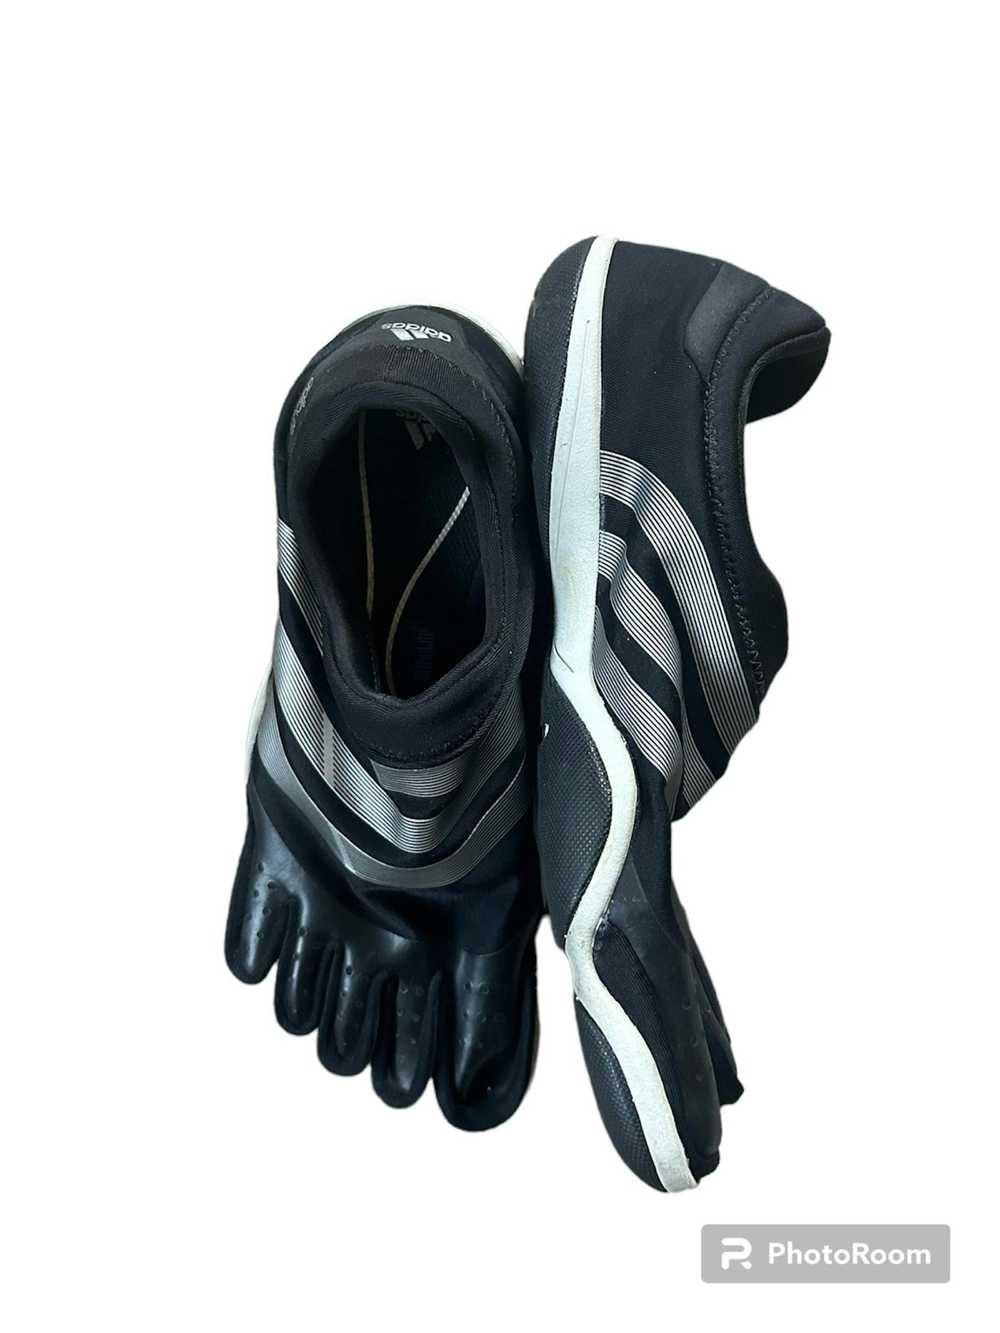 Adidas Adidas Adipure foot running toe shoe - image 4